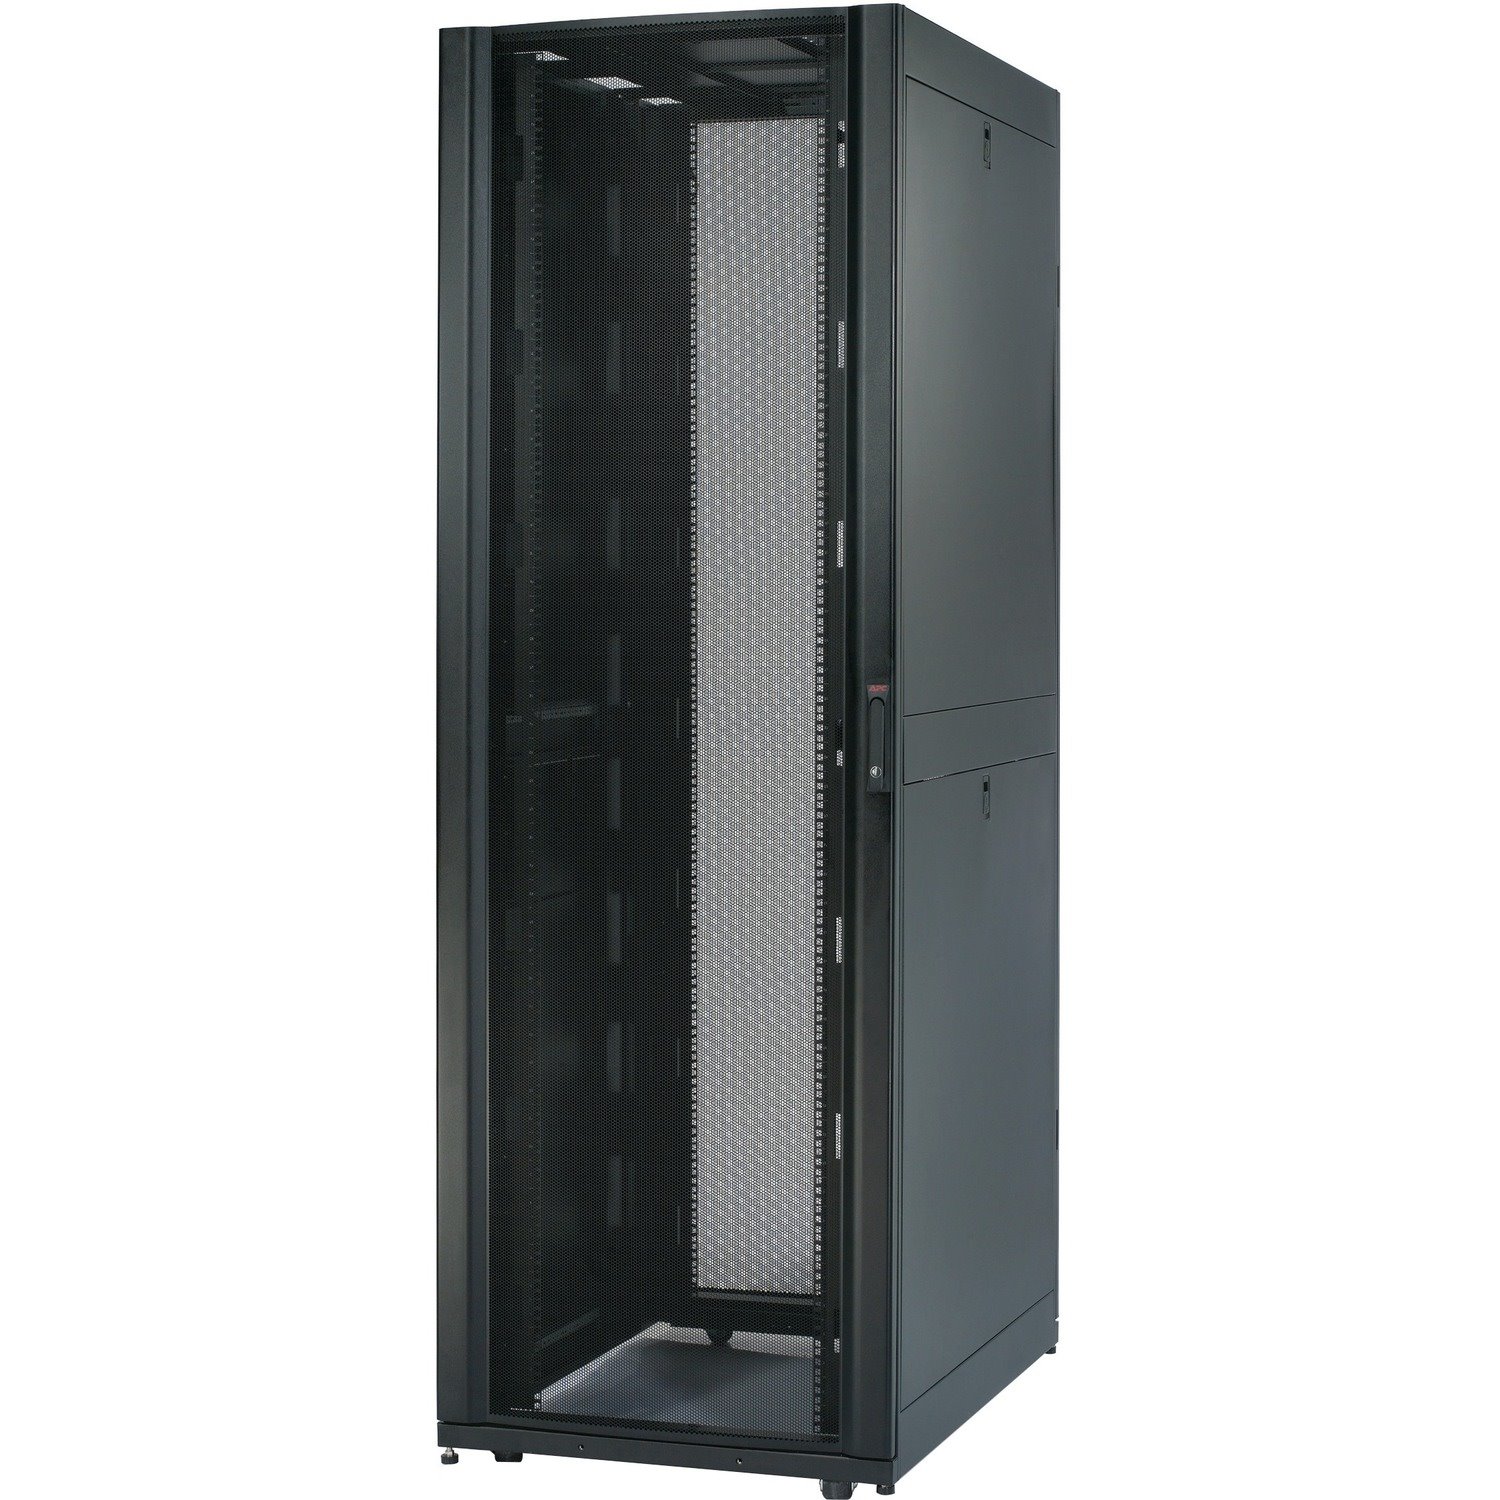 APC by Schneider Electric NetShelter 48U Rack Cabinet for Blade Server, Converged Infrastructure - Black